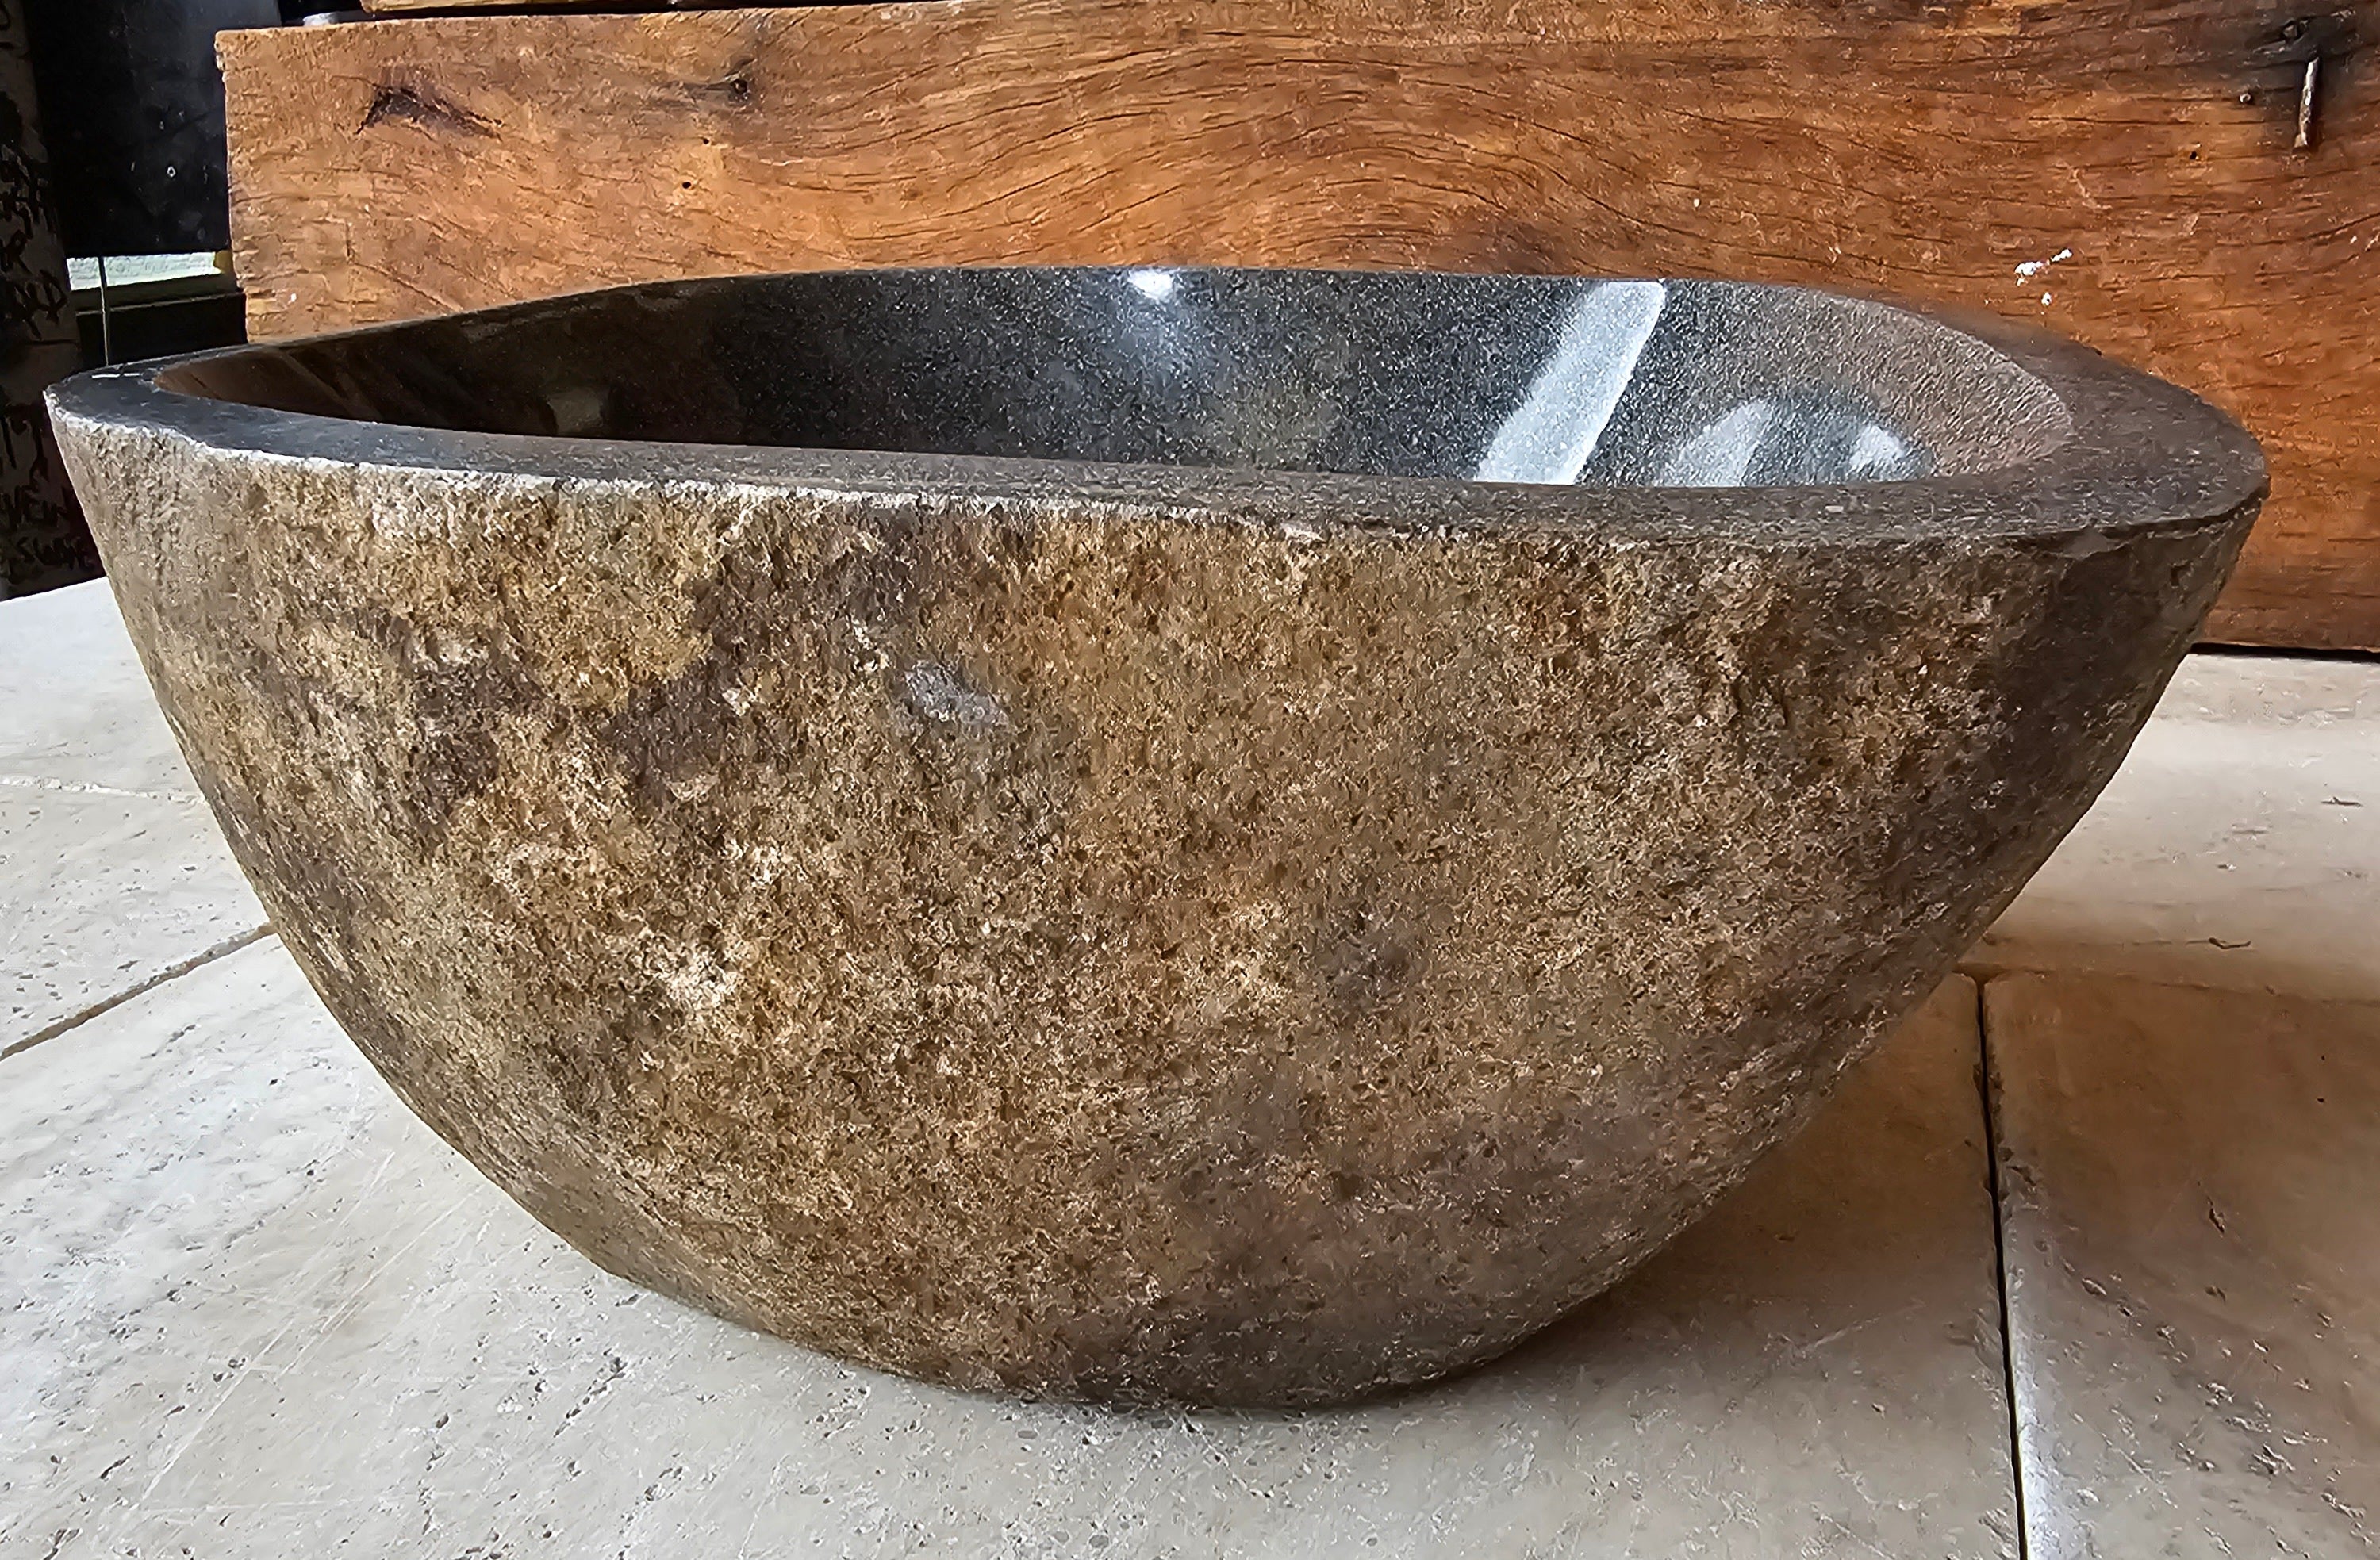 Handmade Natural Oval River Stone Bathroom Basin - RM 2306008